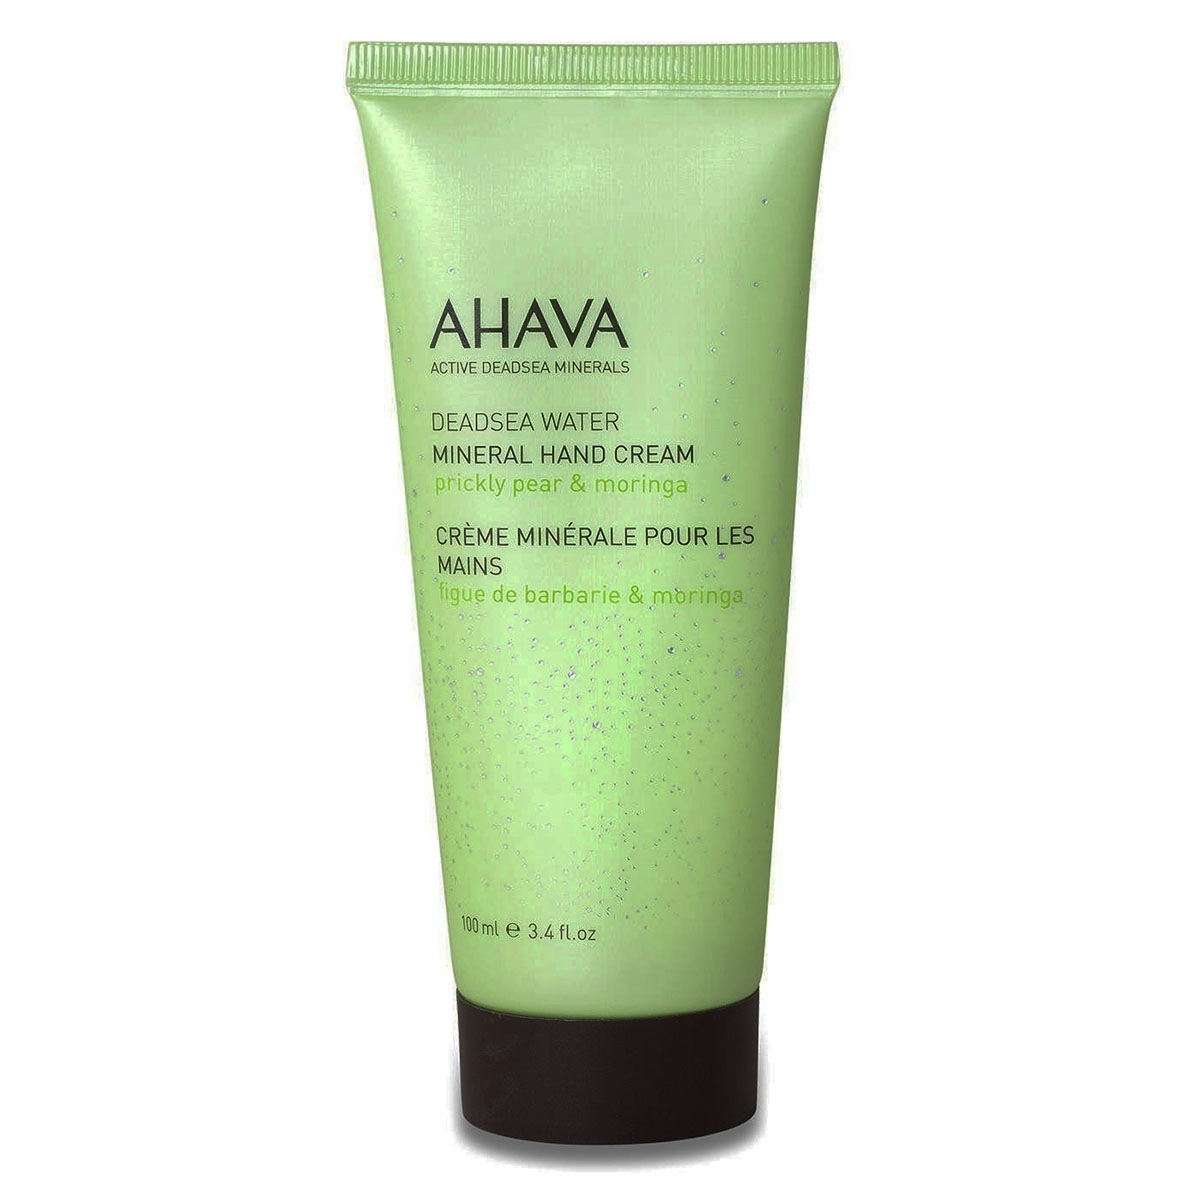 AHAVA Dead Sea Water Mineral Hand Cream - Prickly Pear and Moringa - 1